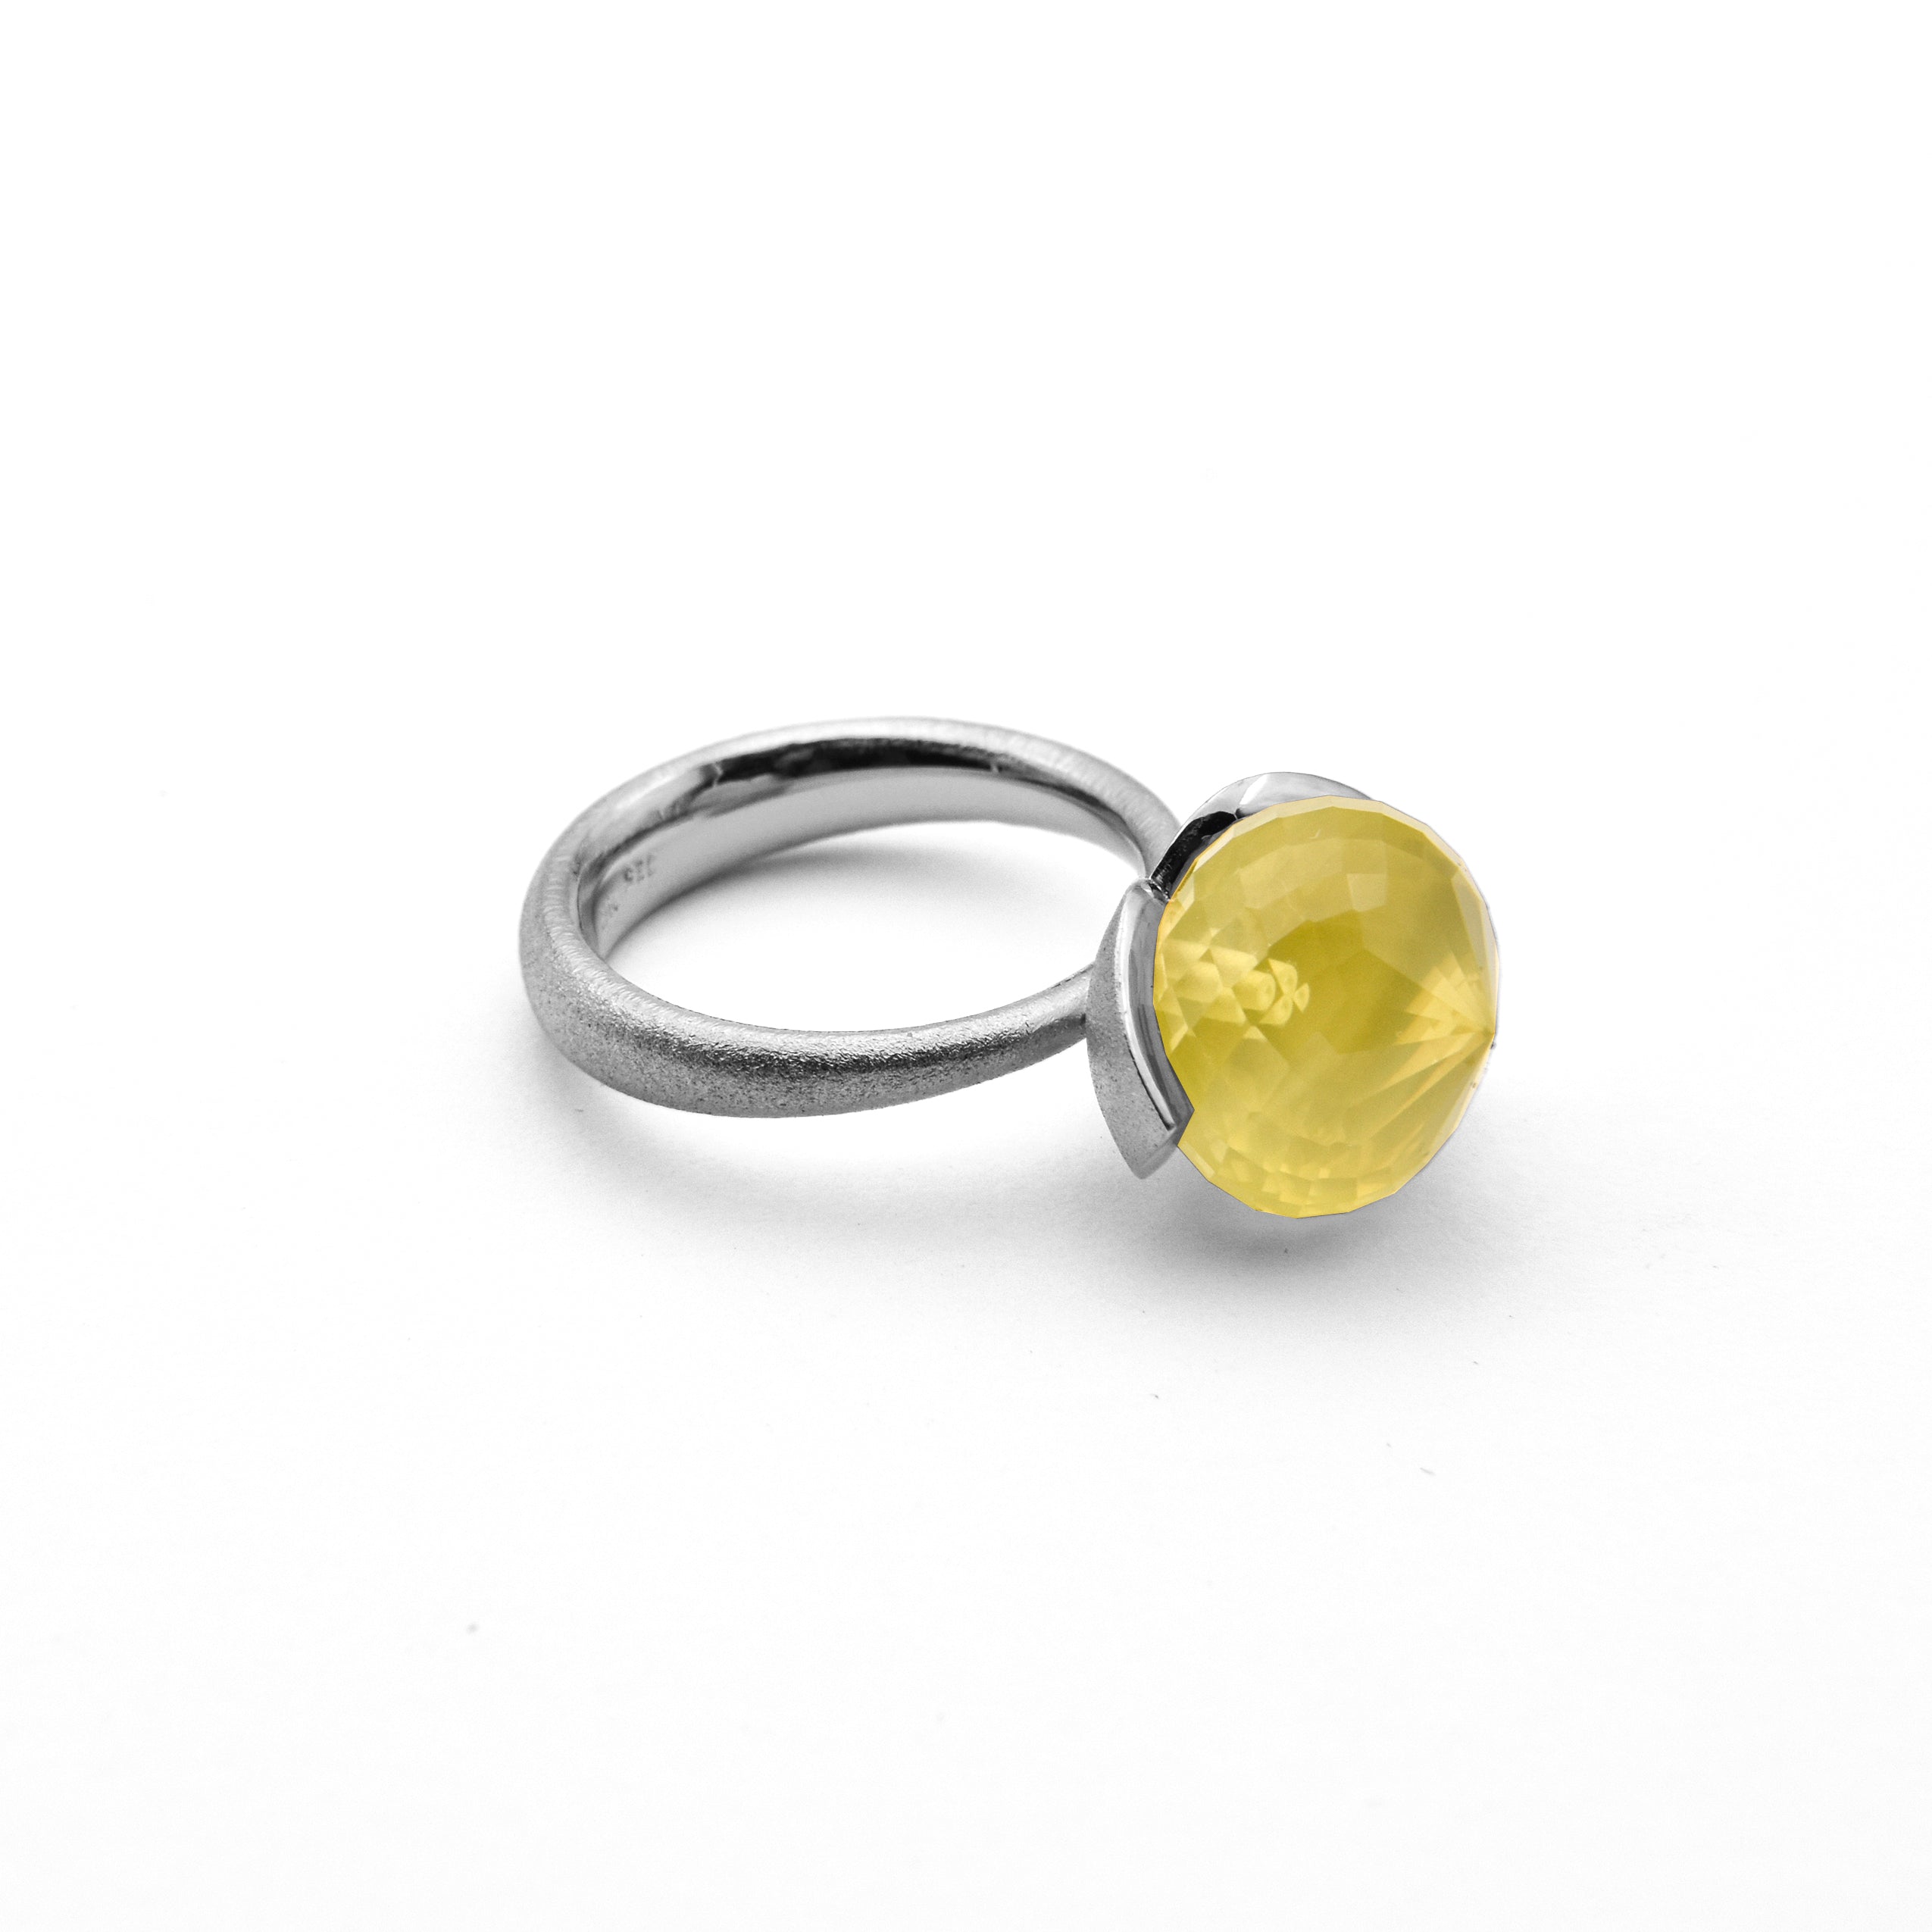 Dolce ring "groot" met citroenkwarts 925/-